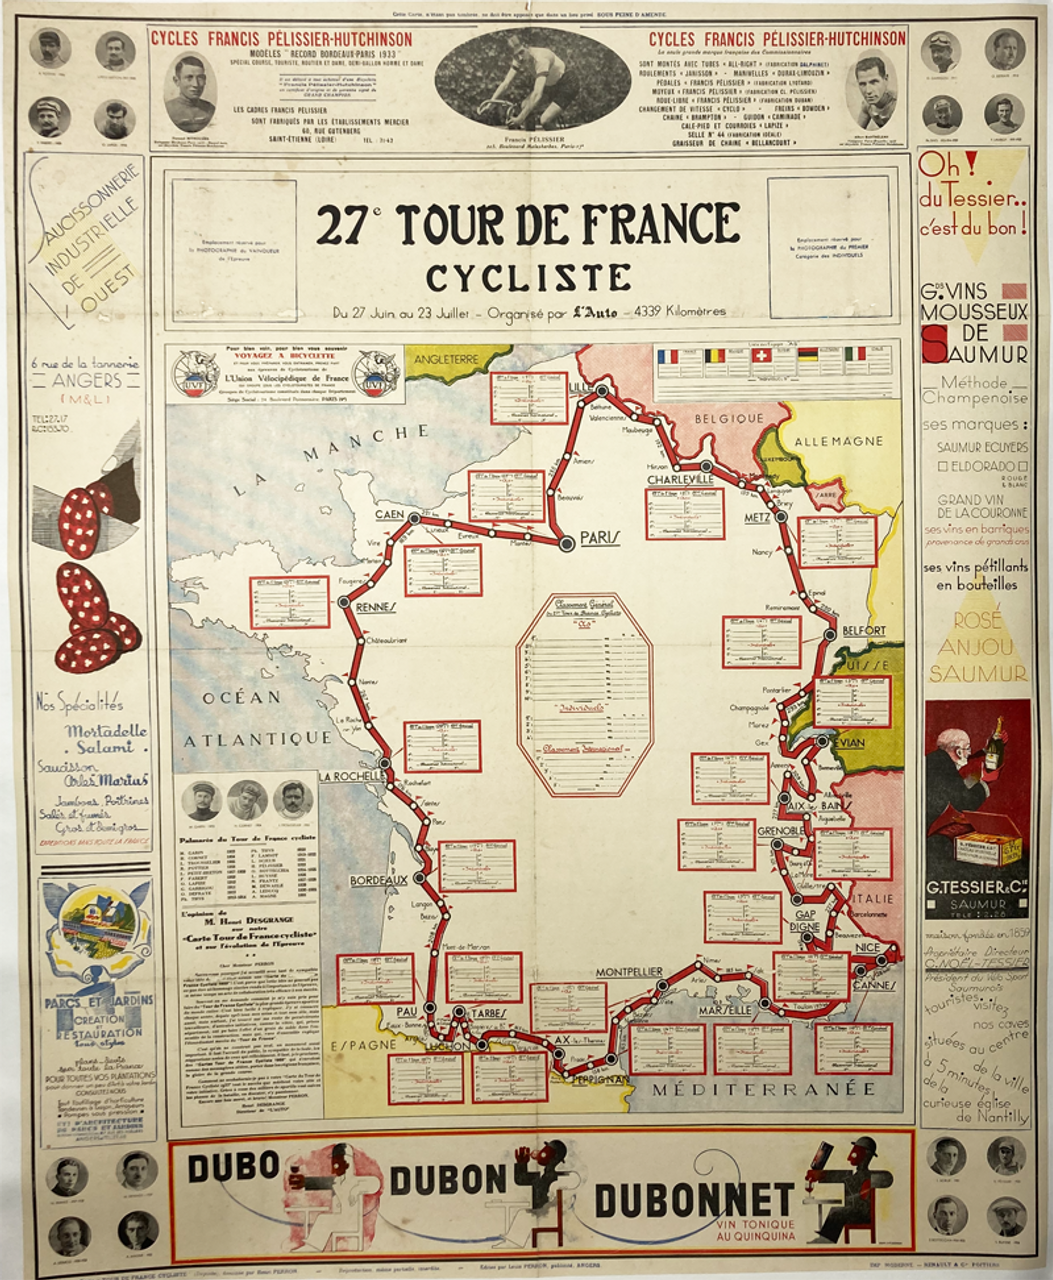 Original fold out map on linen of 27th Tour de France race 1933 featuring Cassandre's Dubonnet triptych on the bottom